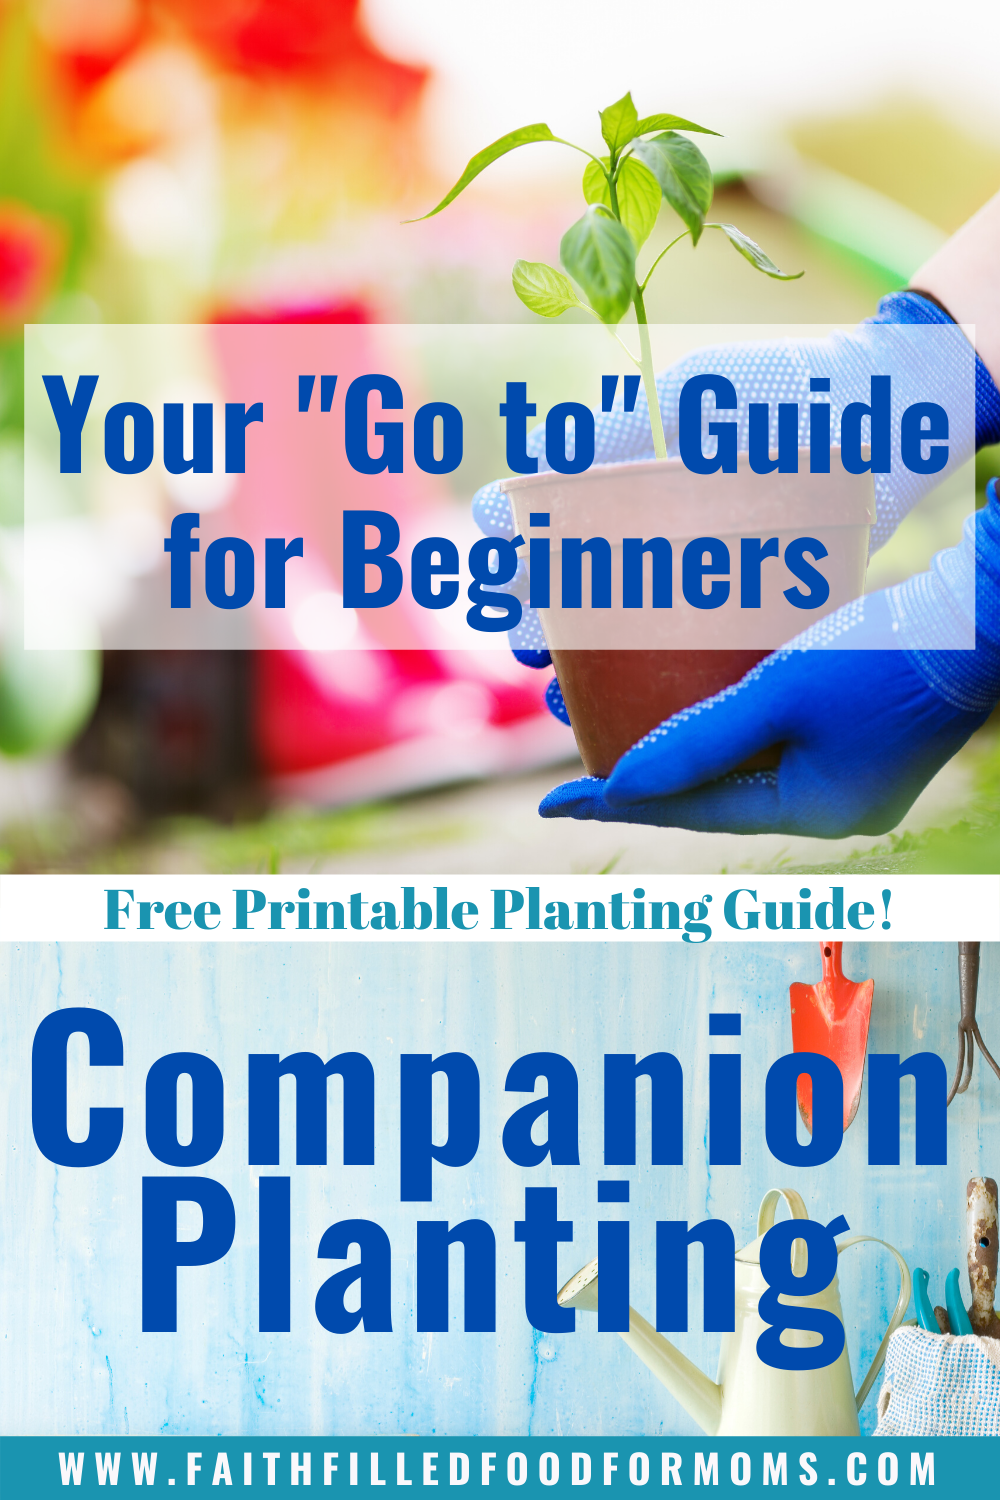 Companion Planting Basics and Garden Planning